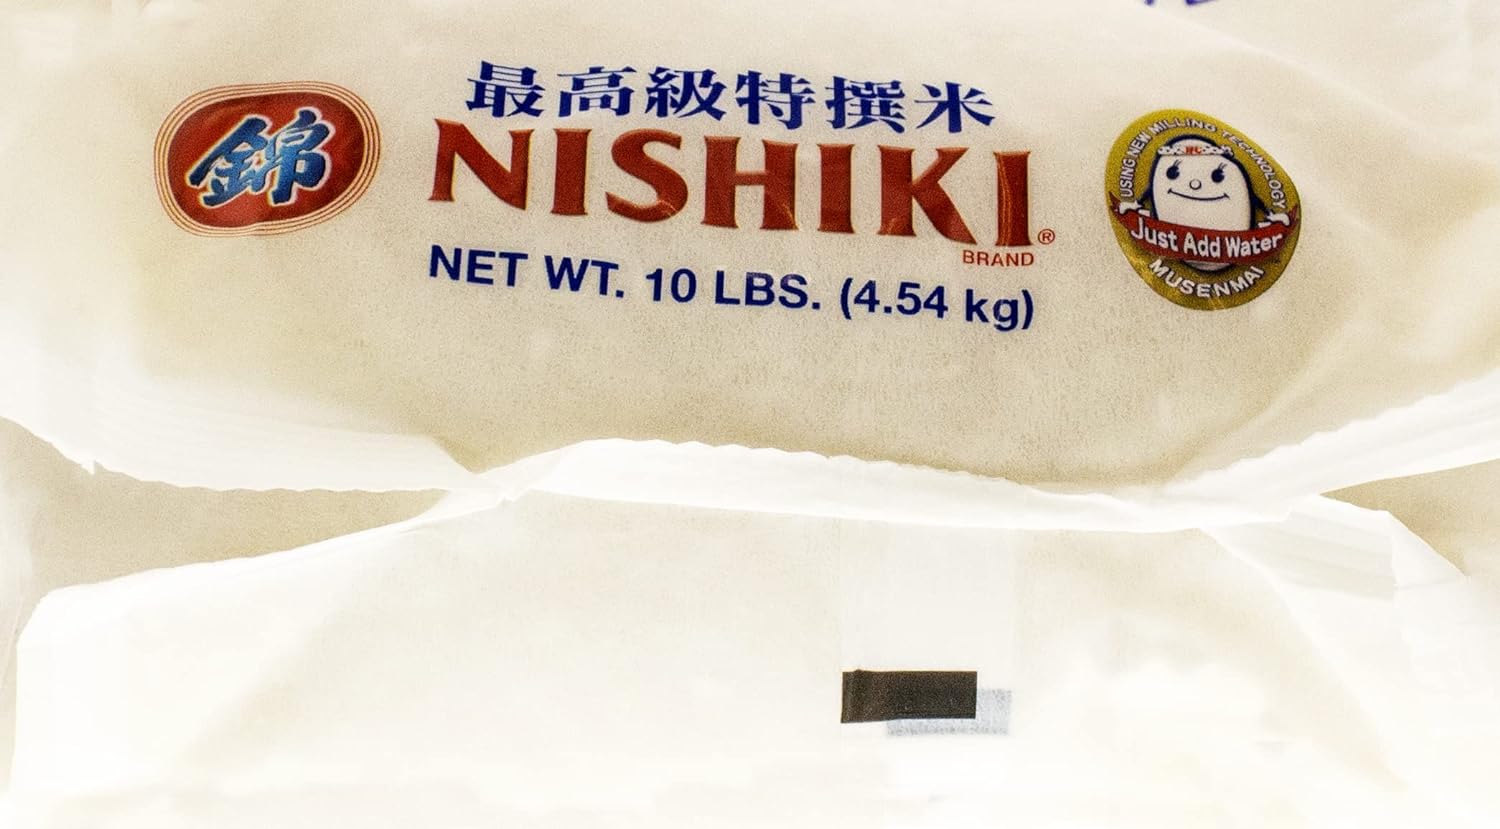 nishiki rice